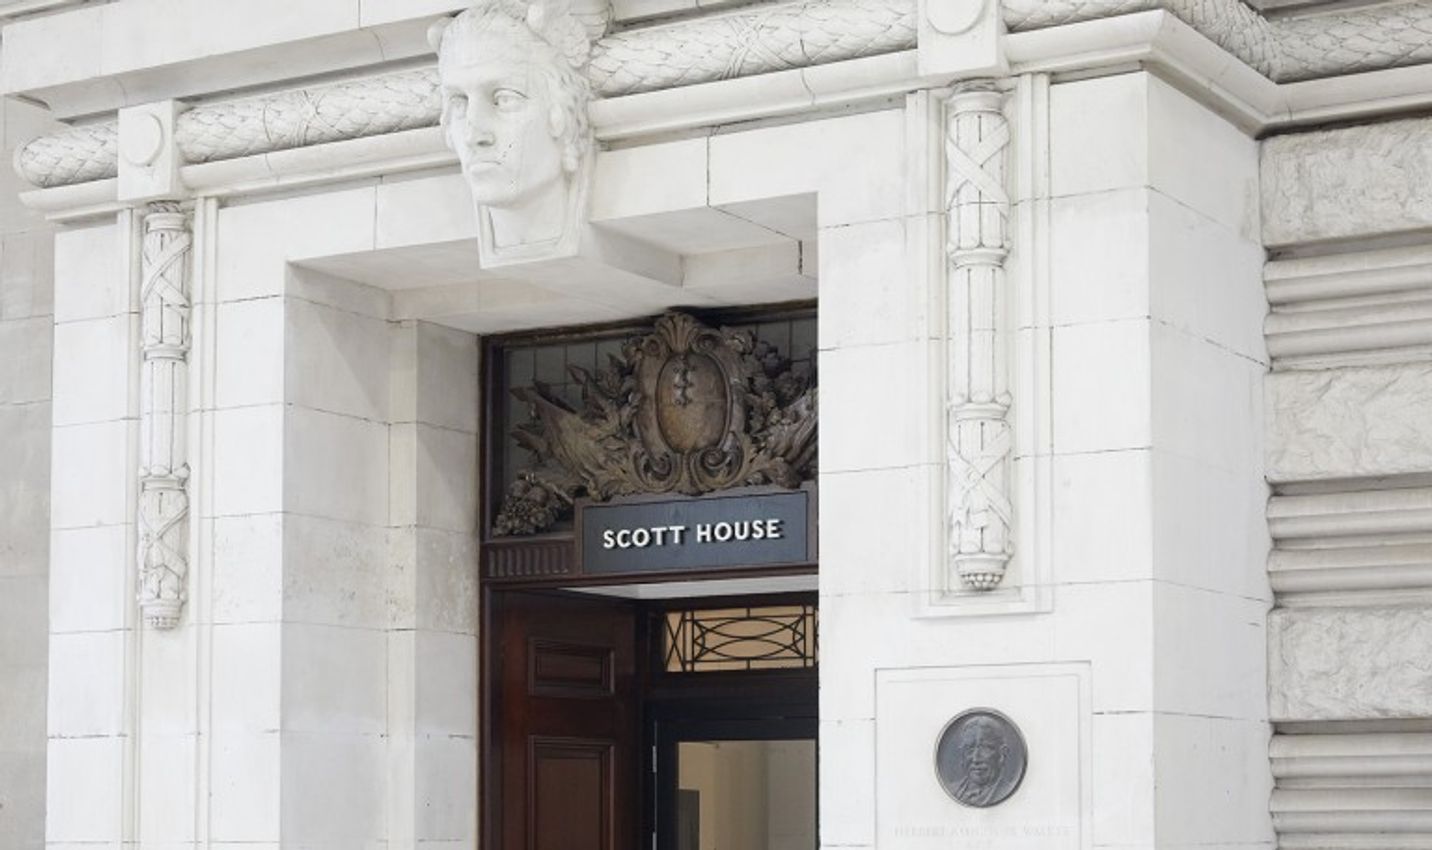 Scott House, Waterloo Station, London, SE1 7LY